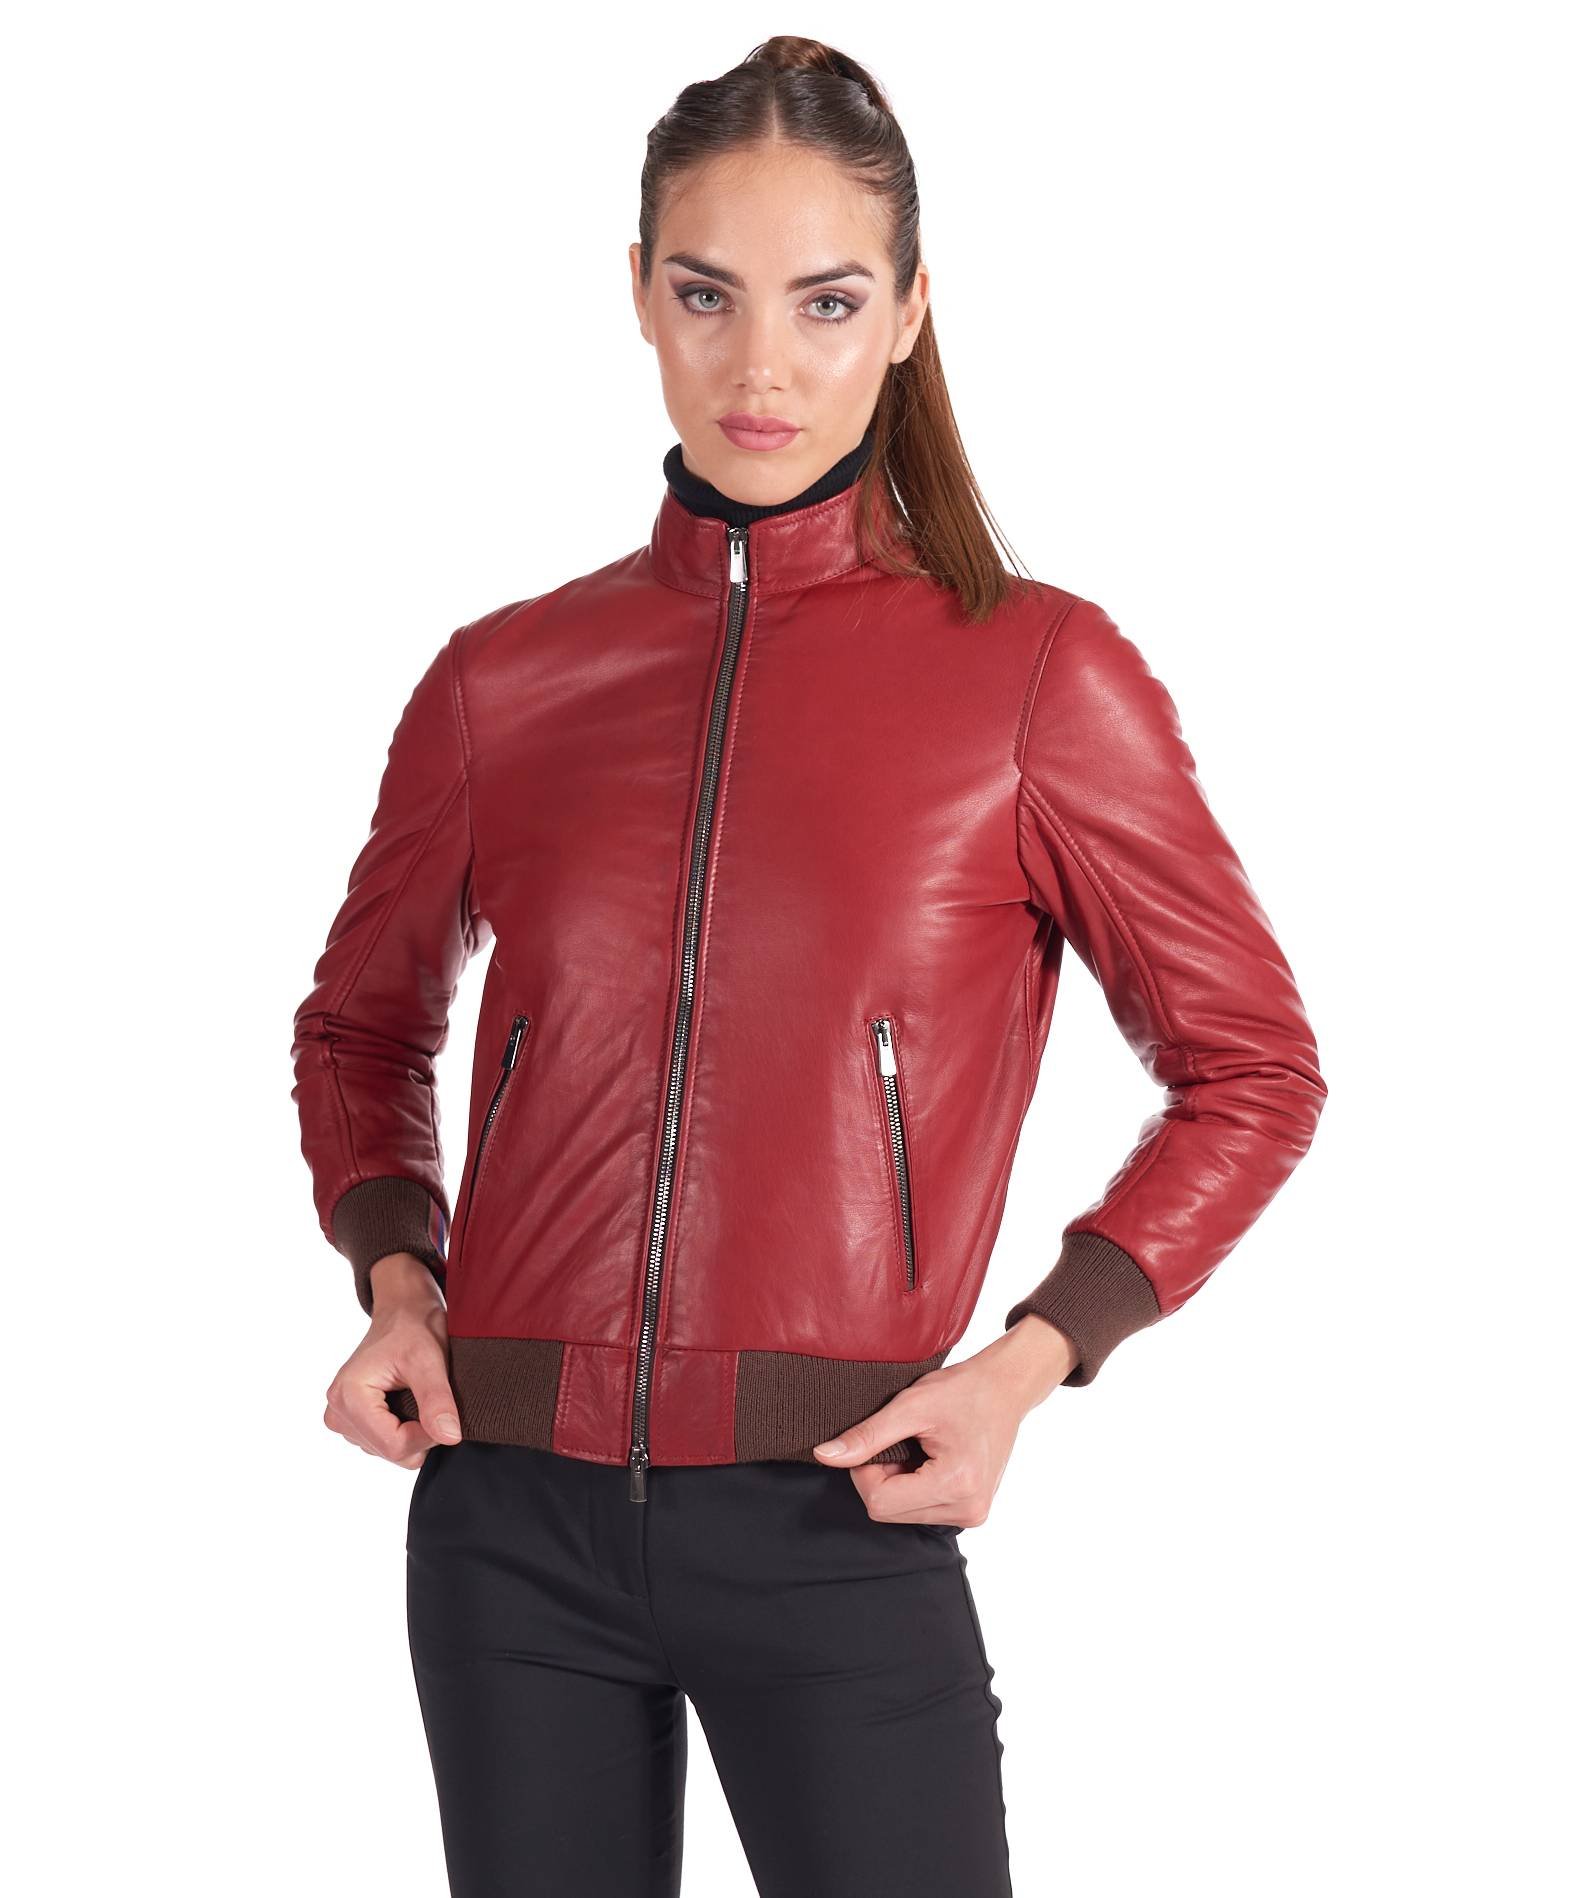 Women's Leather bomber Jacket central zip leather red vinatge G154